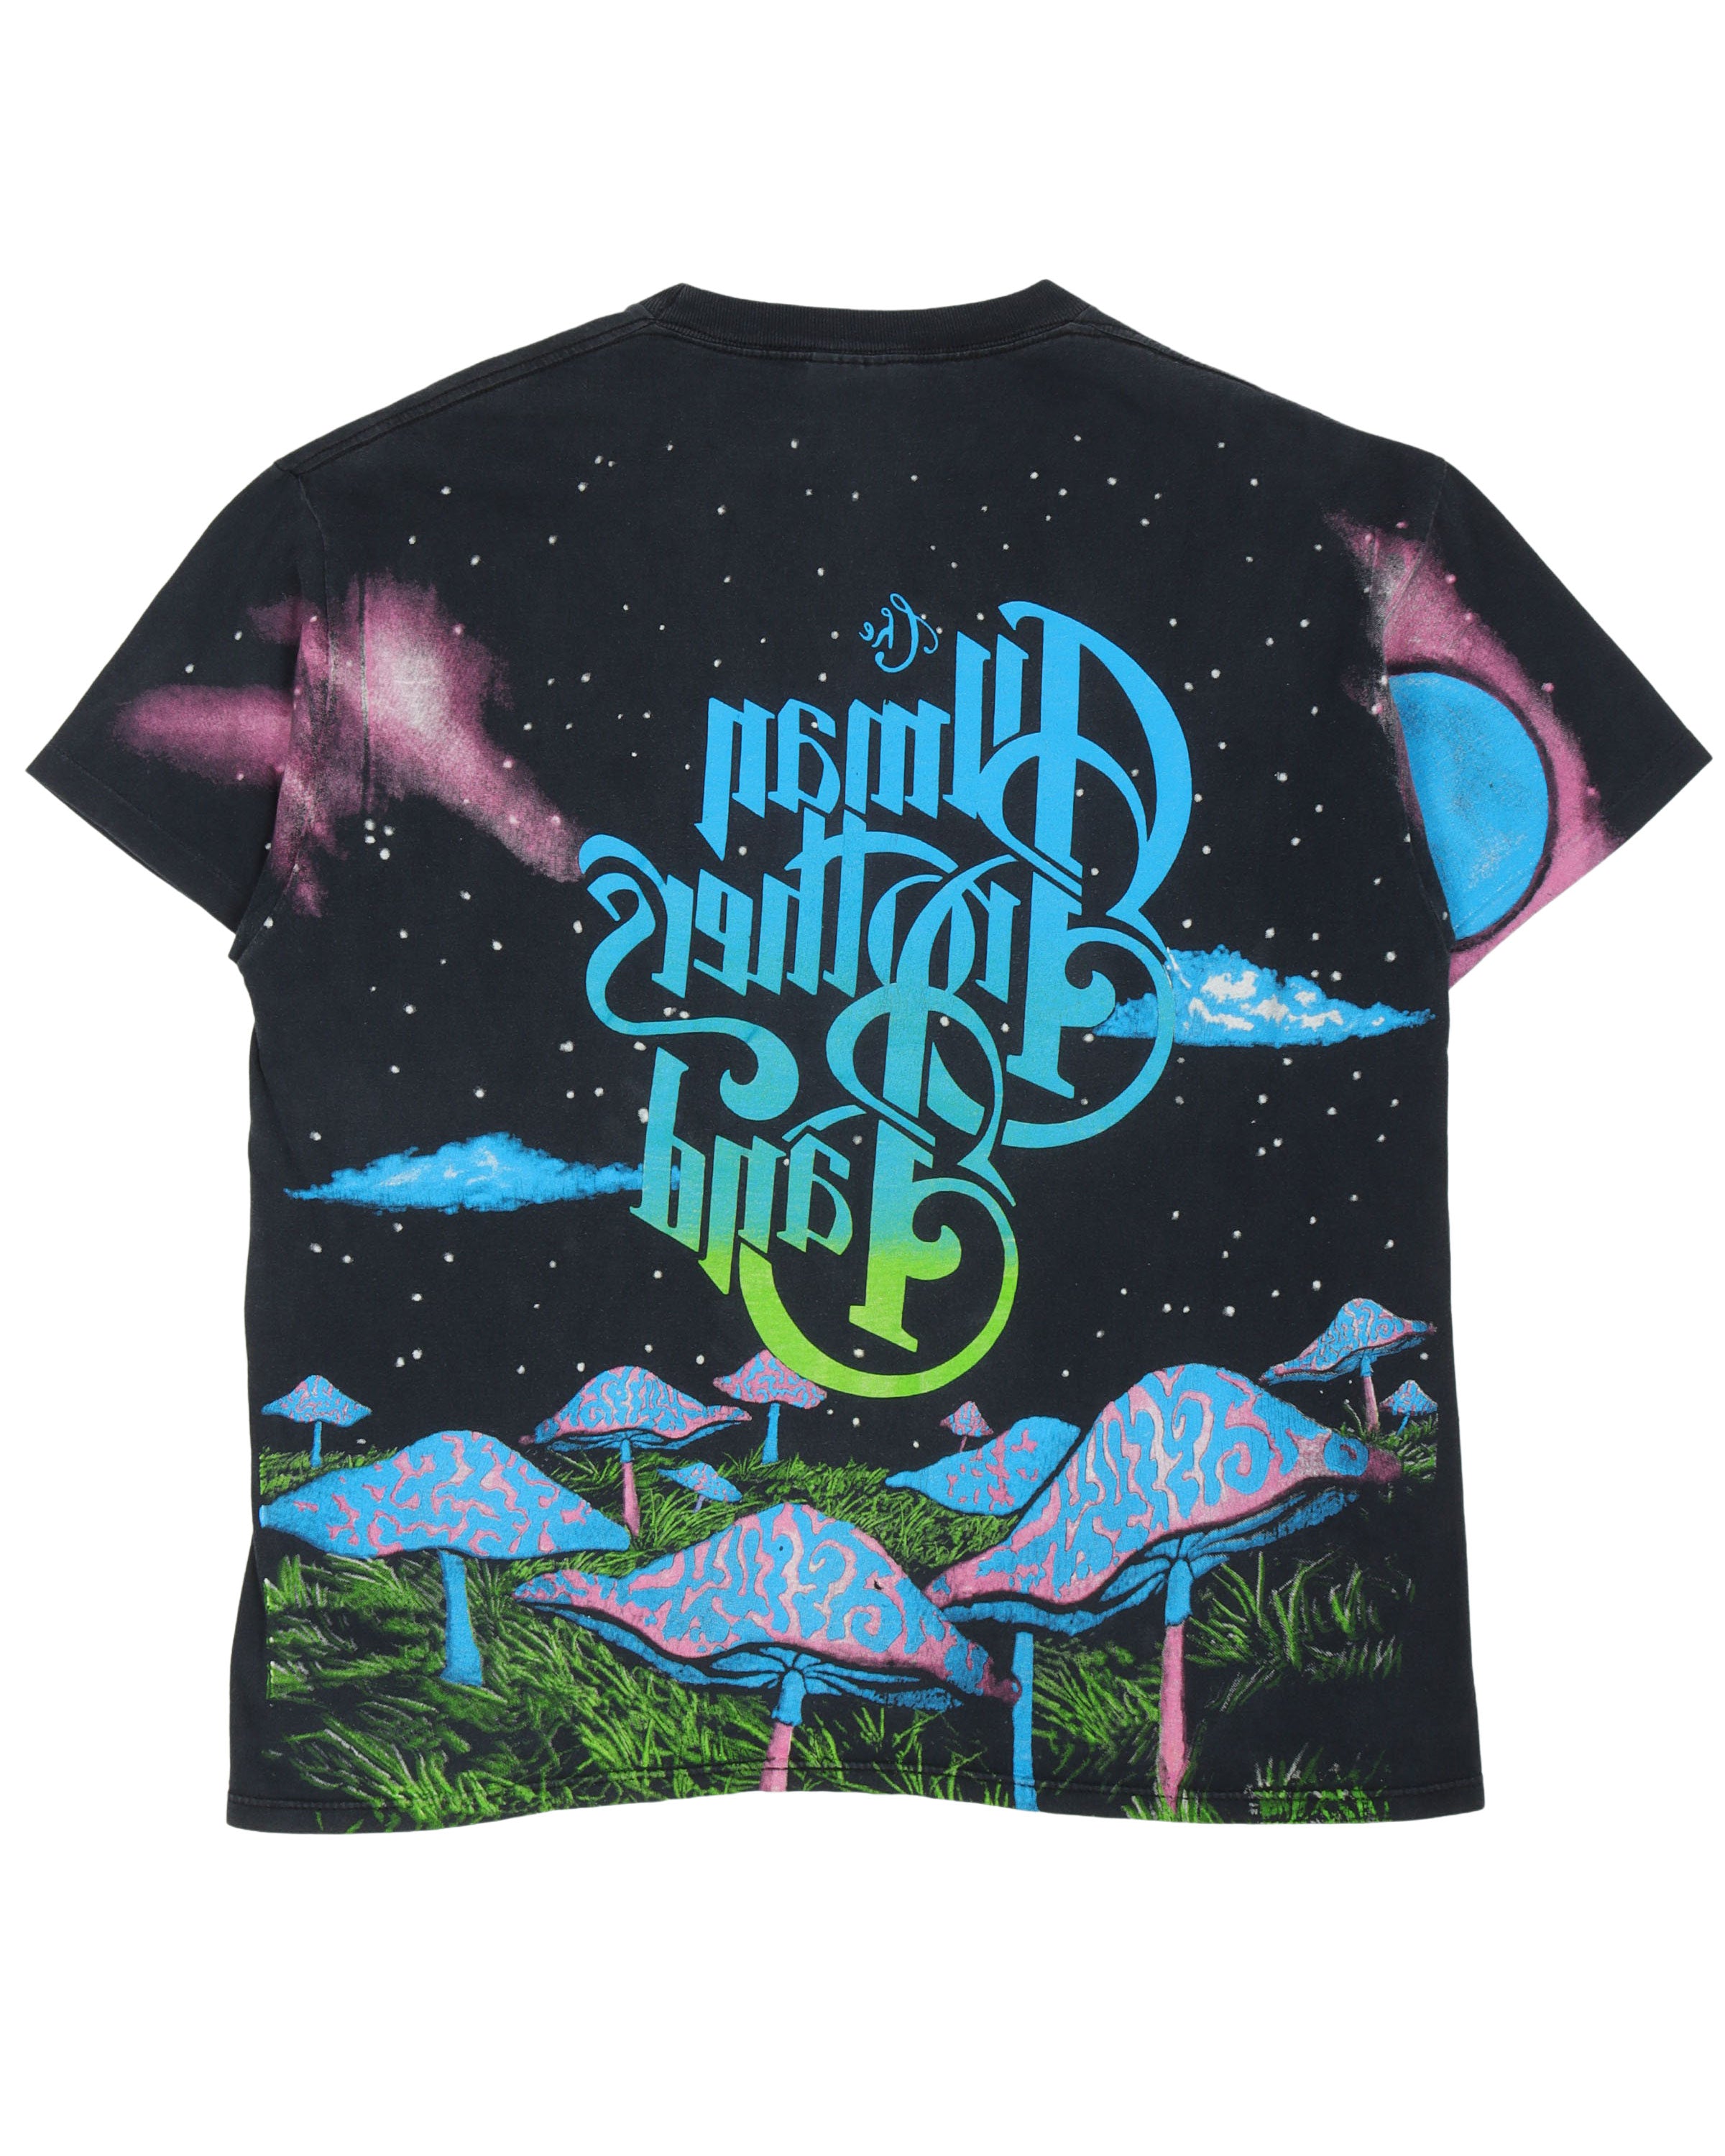 Allman Brothers Band Mushroom T-Shirt